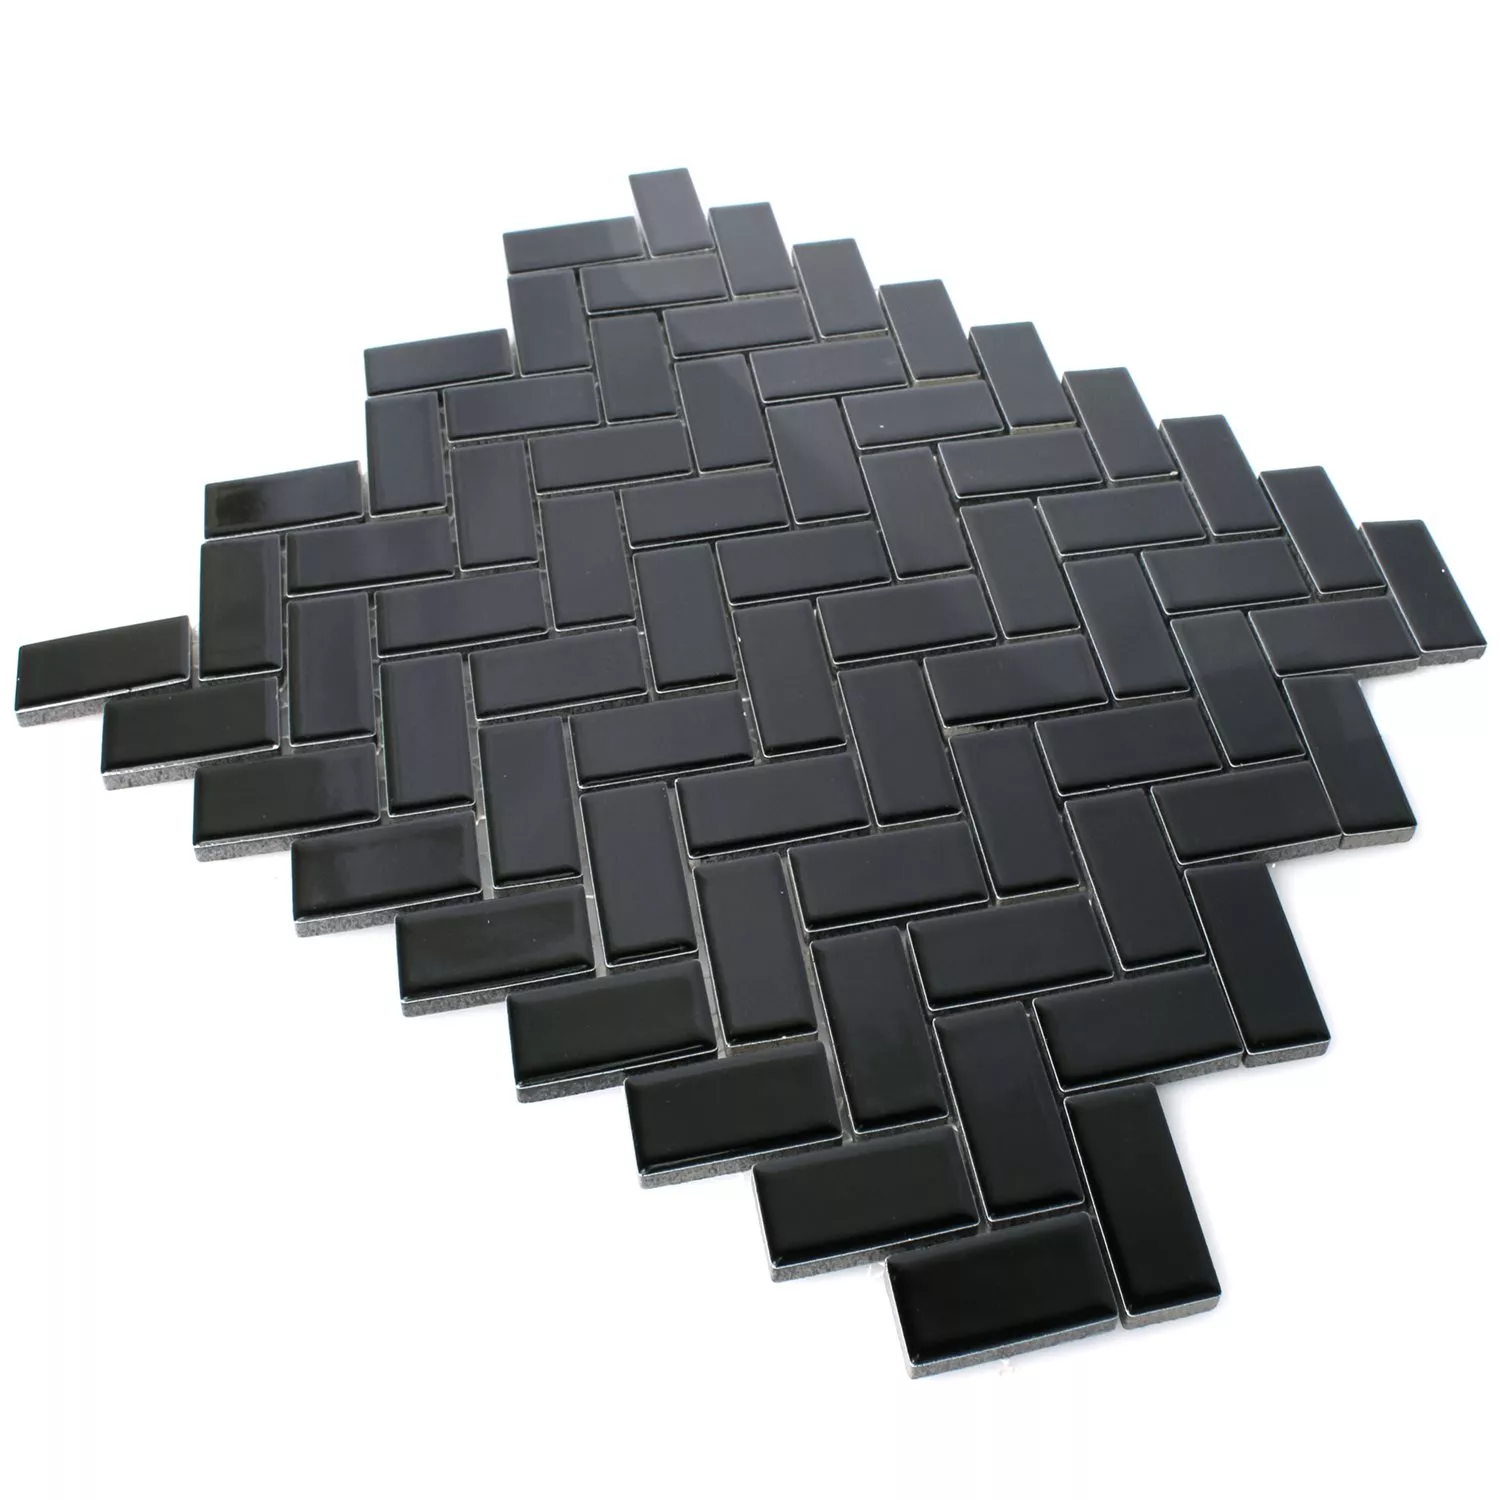 Mosaic Tiles Ceramic Casillas Black Glossy